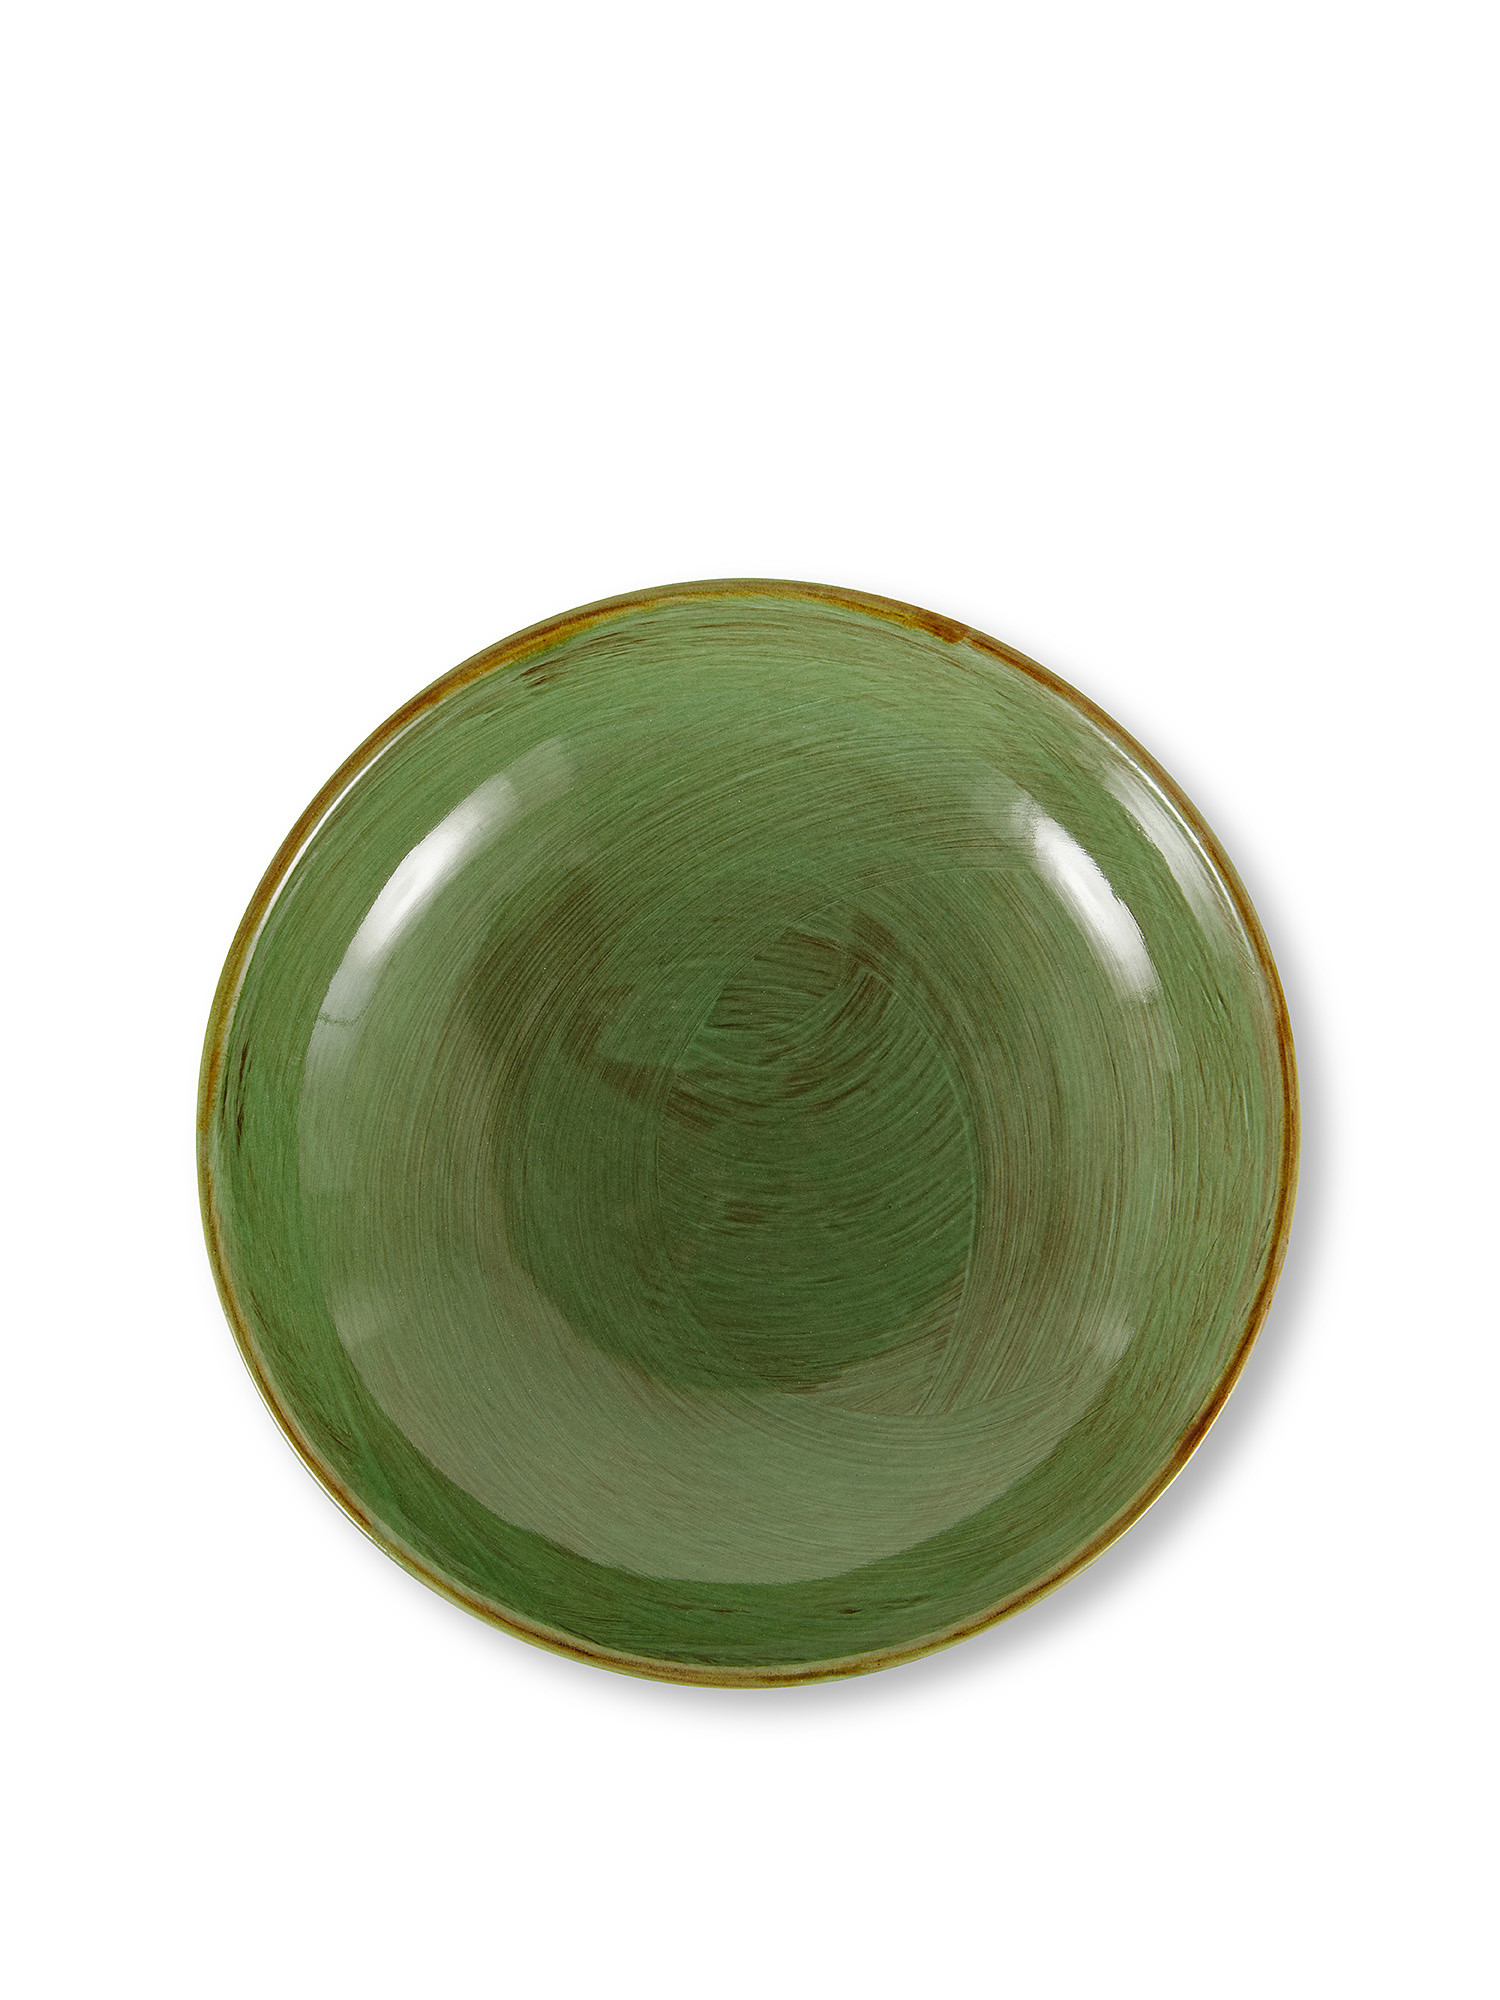 Soup plate in ceramic by Ceramiche Pugliesi Fratelli Colì, Green, large image number 1